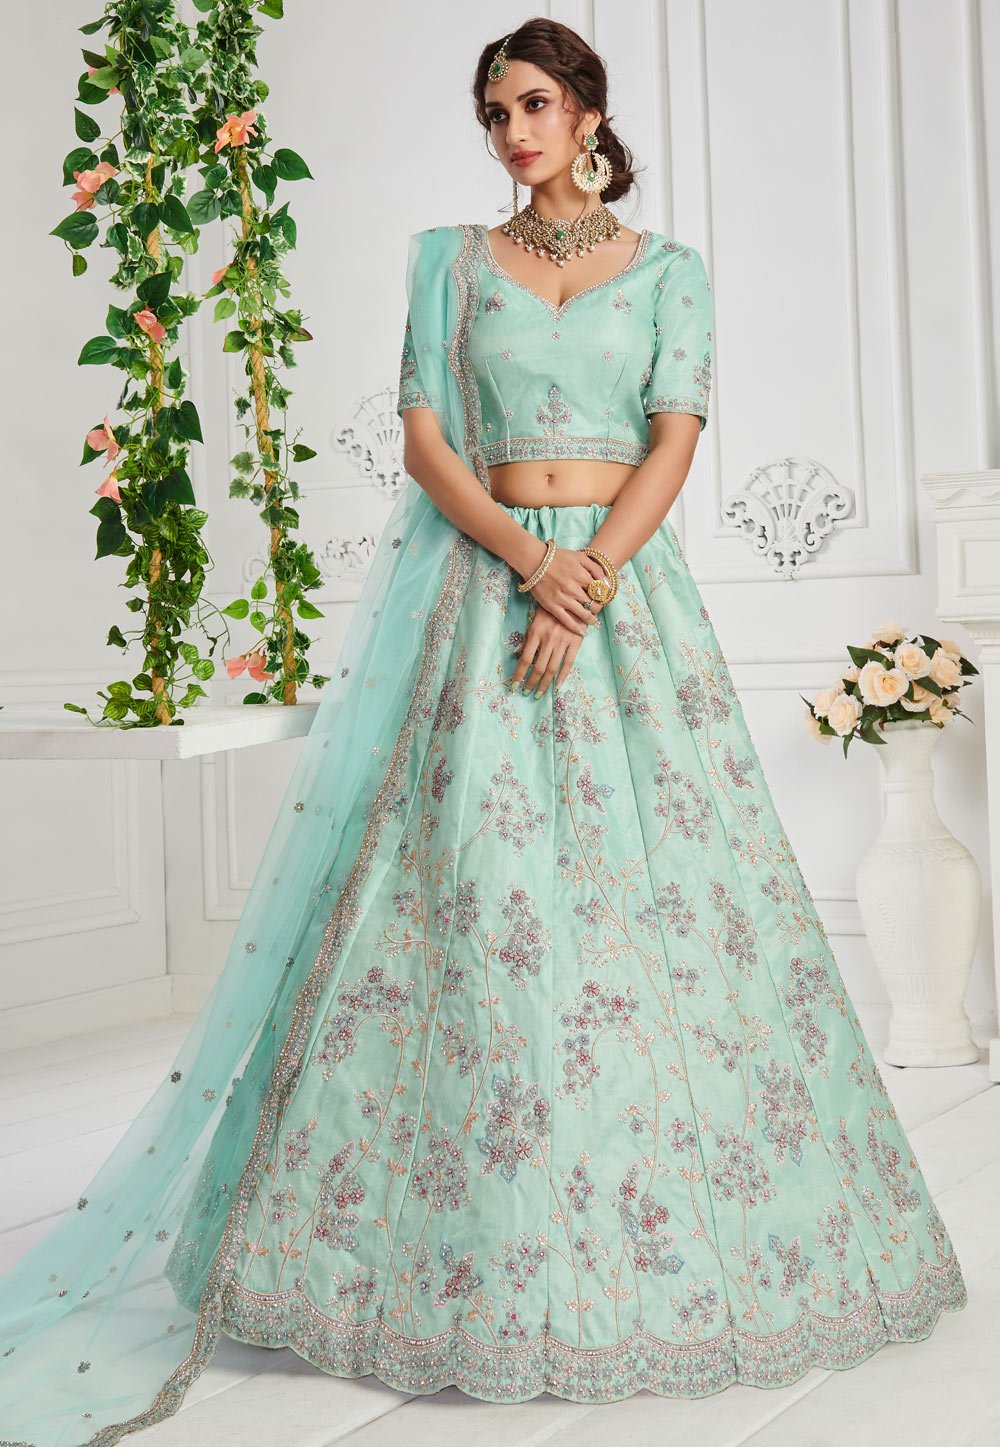 Pale Turquoise Sequins Lehenga - Embroidered Bridal Lehenga Choli